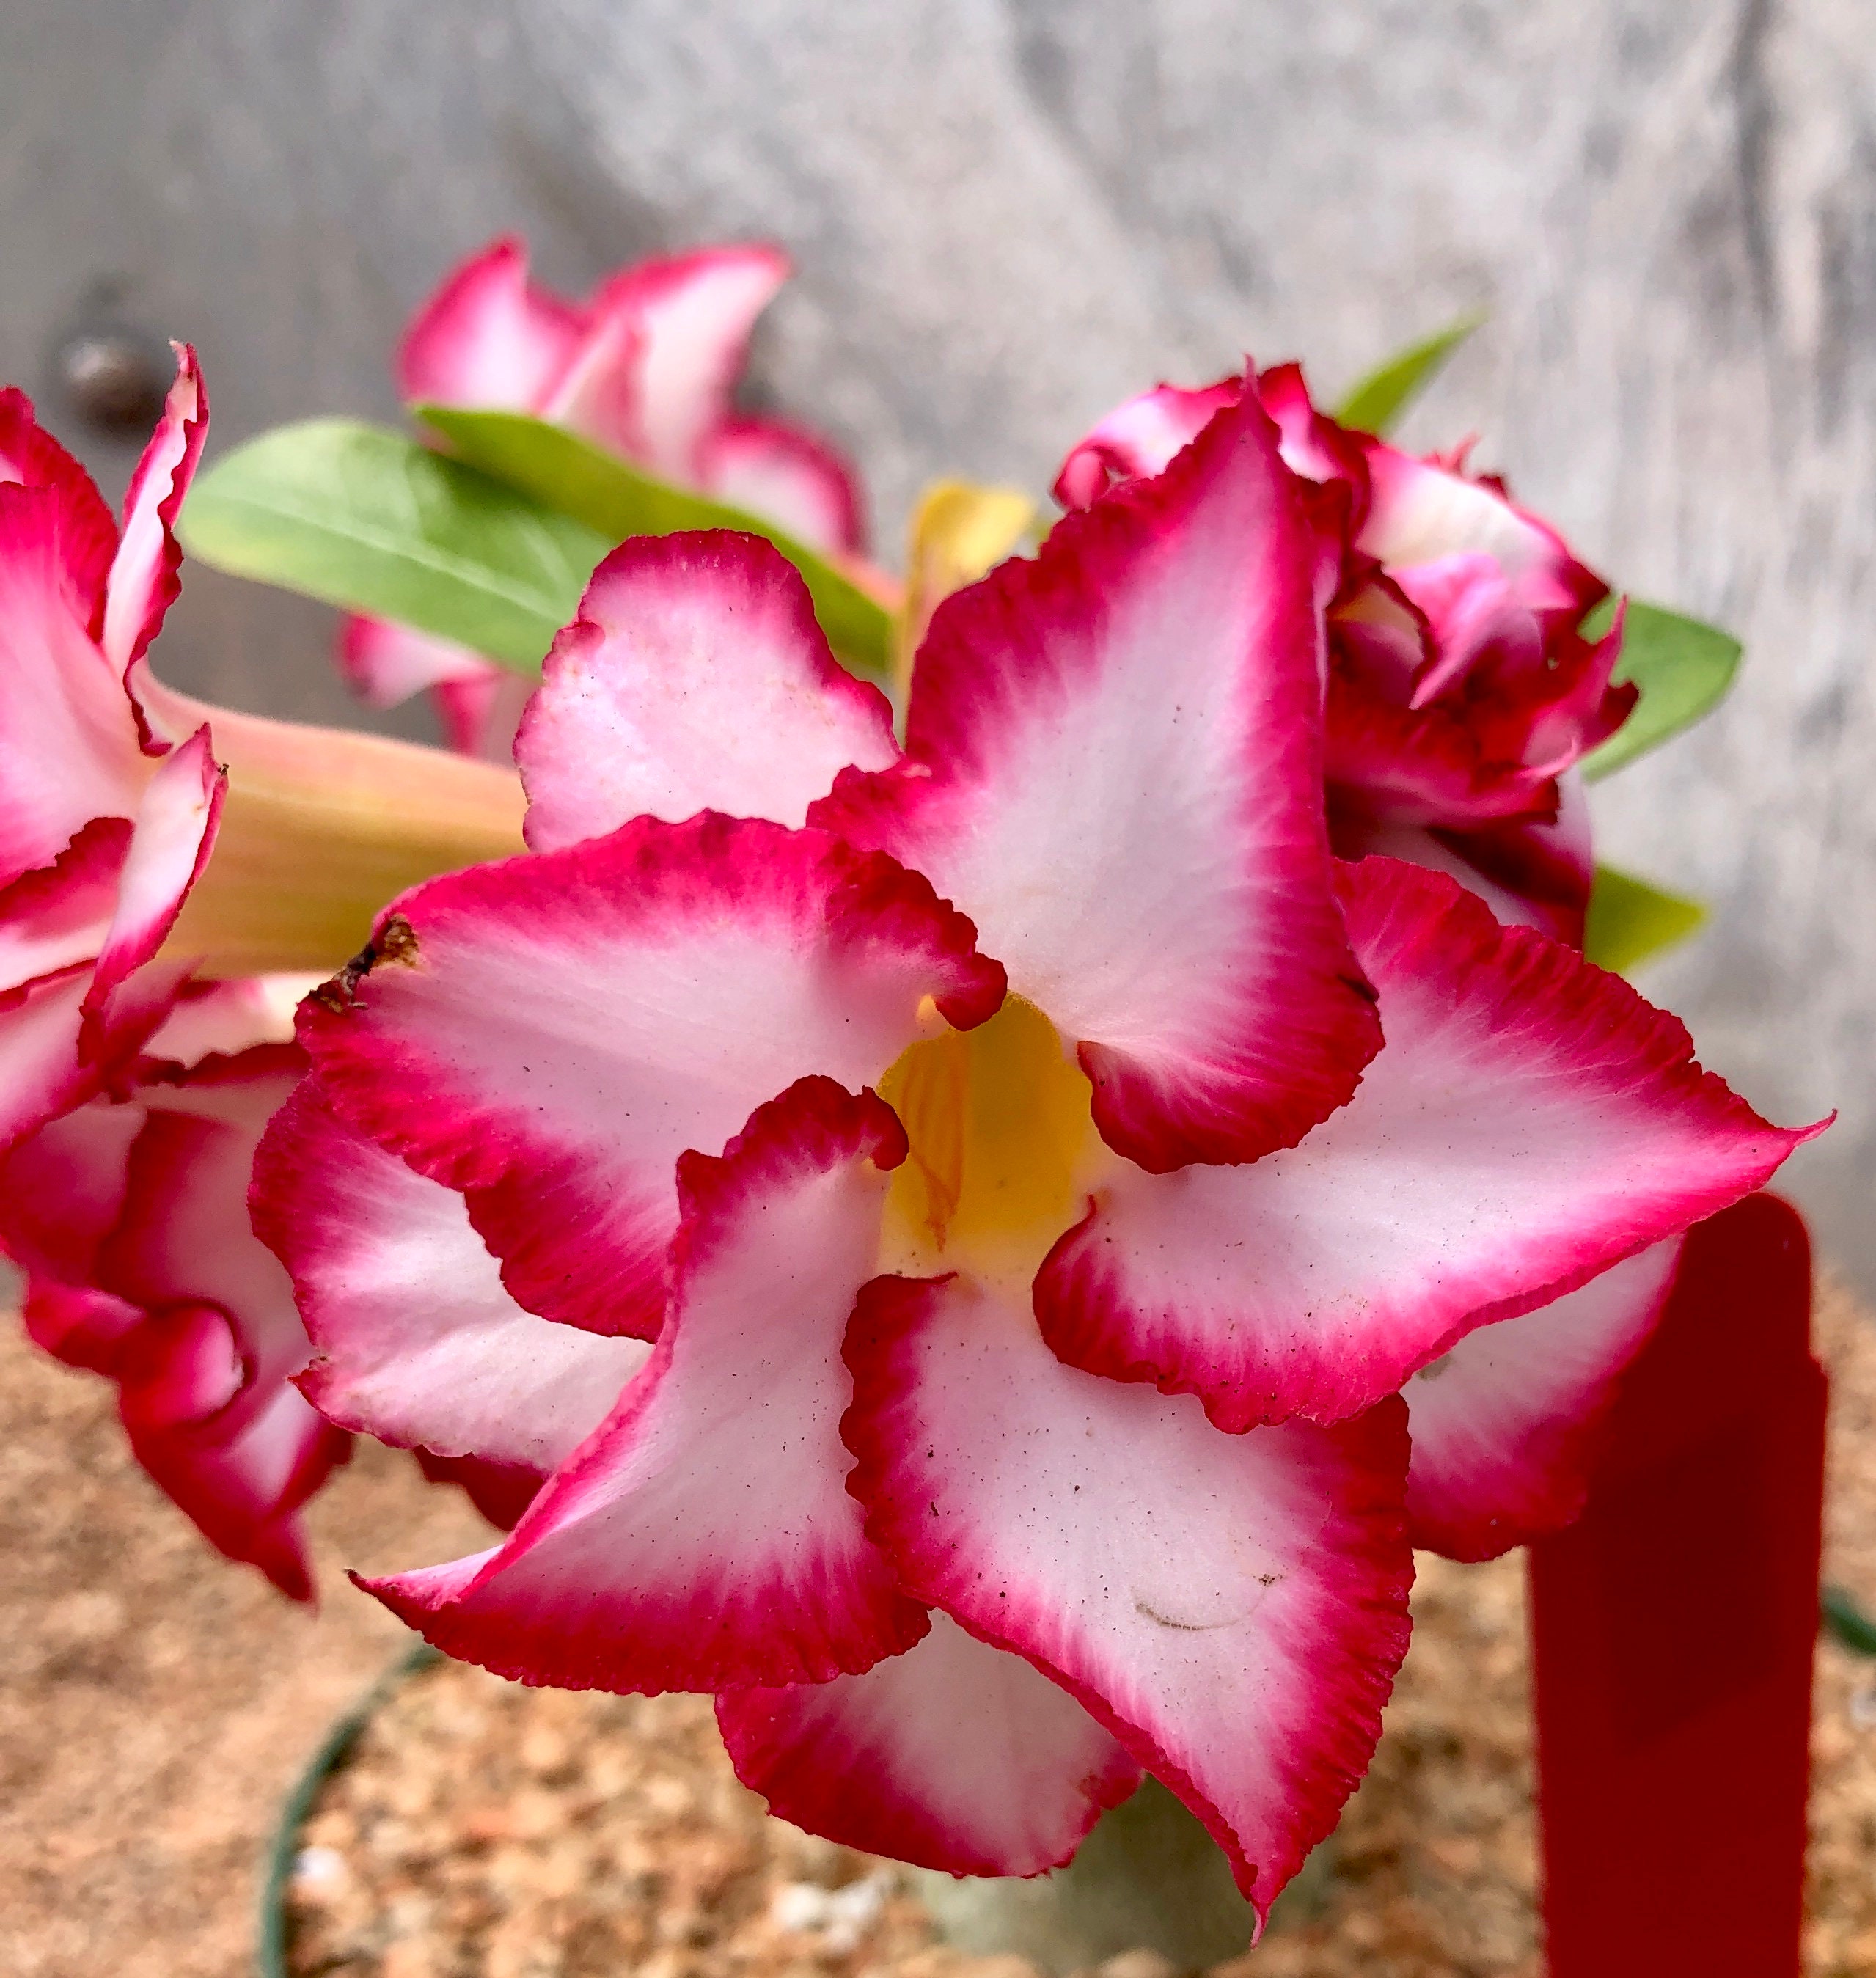 Albums 98+ Images pictures of desert rose flowers Full HD, 2k, 4k